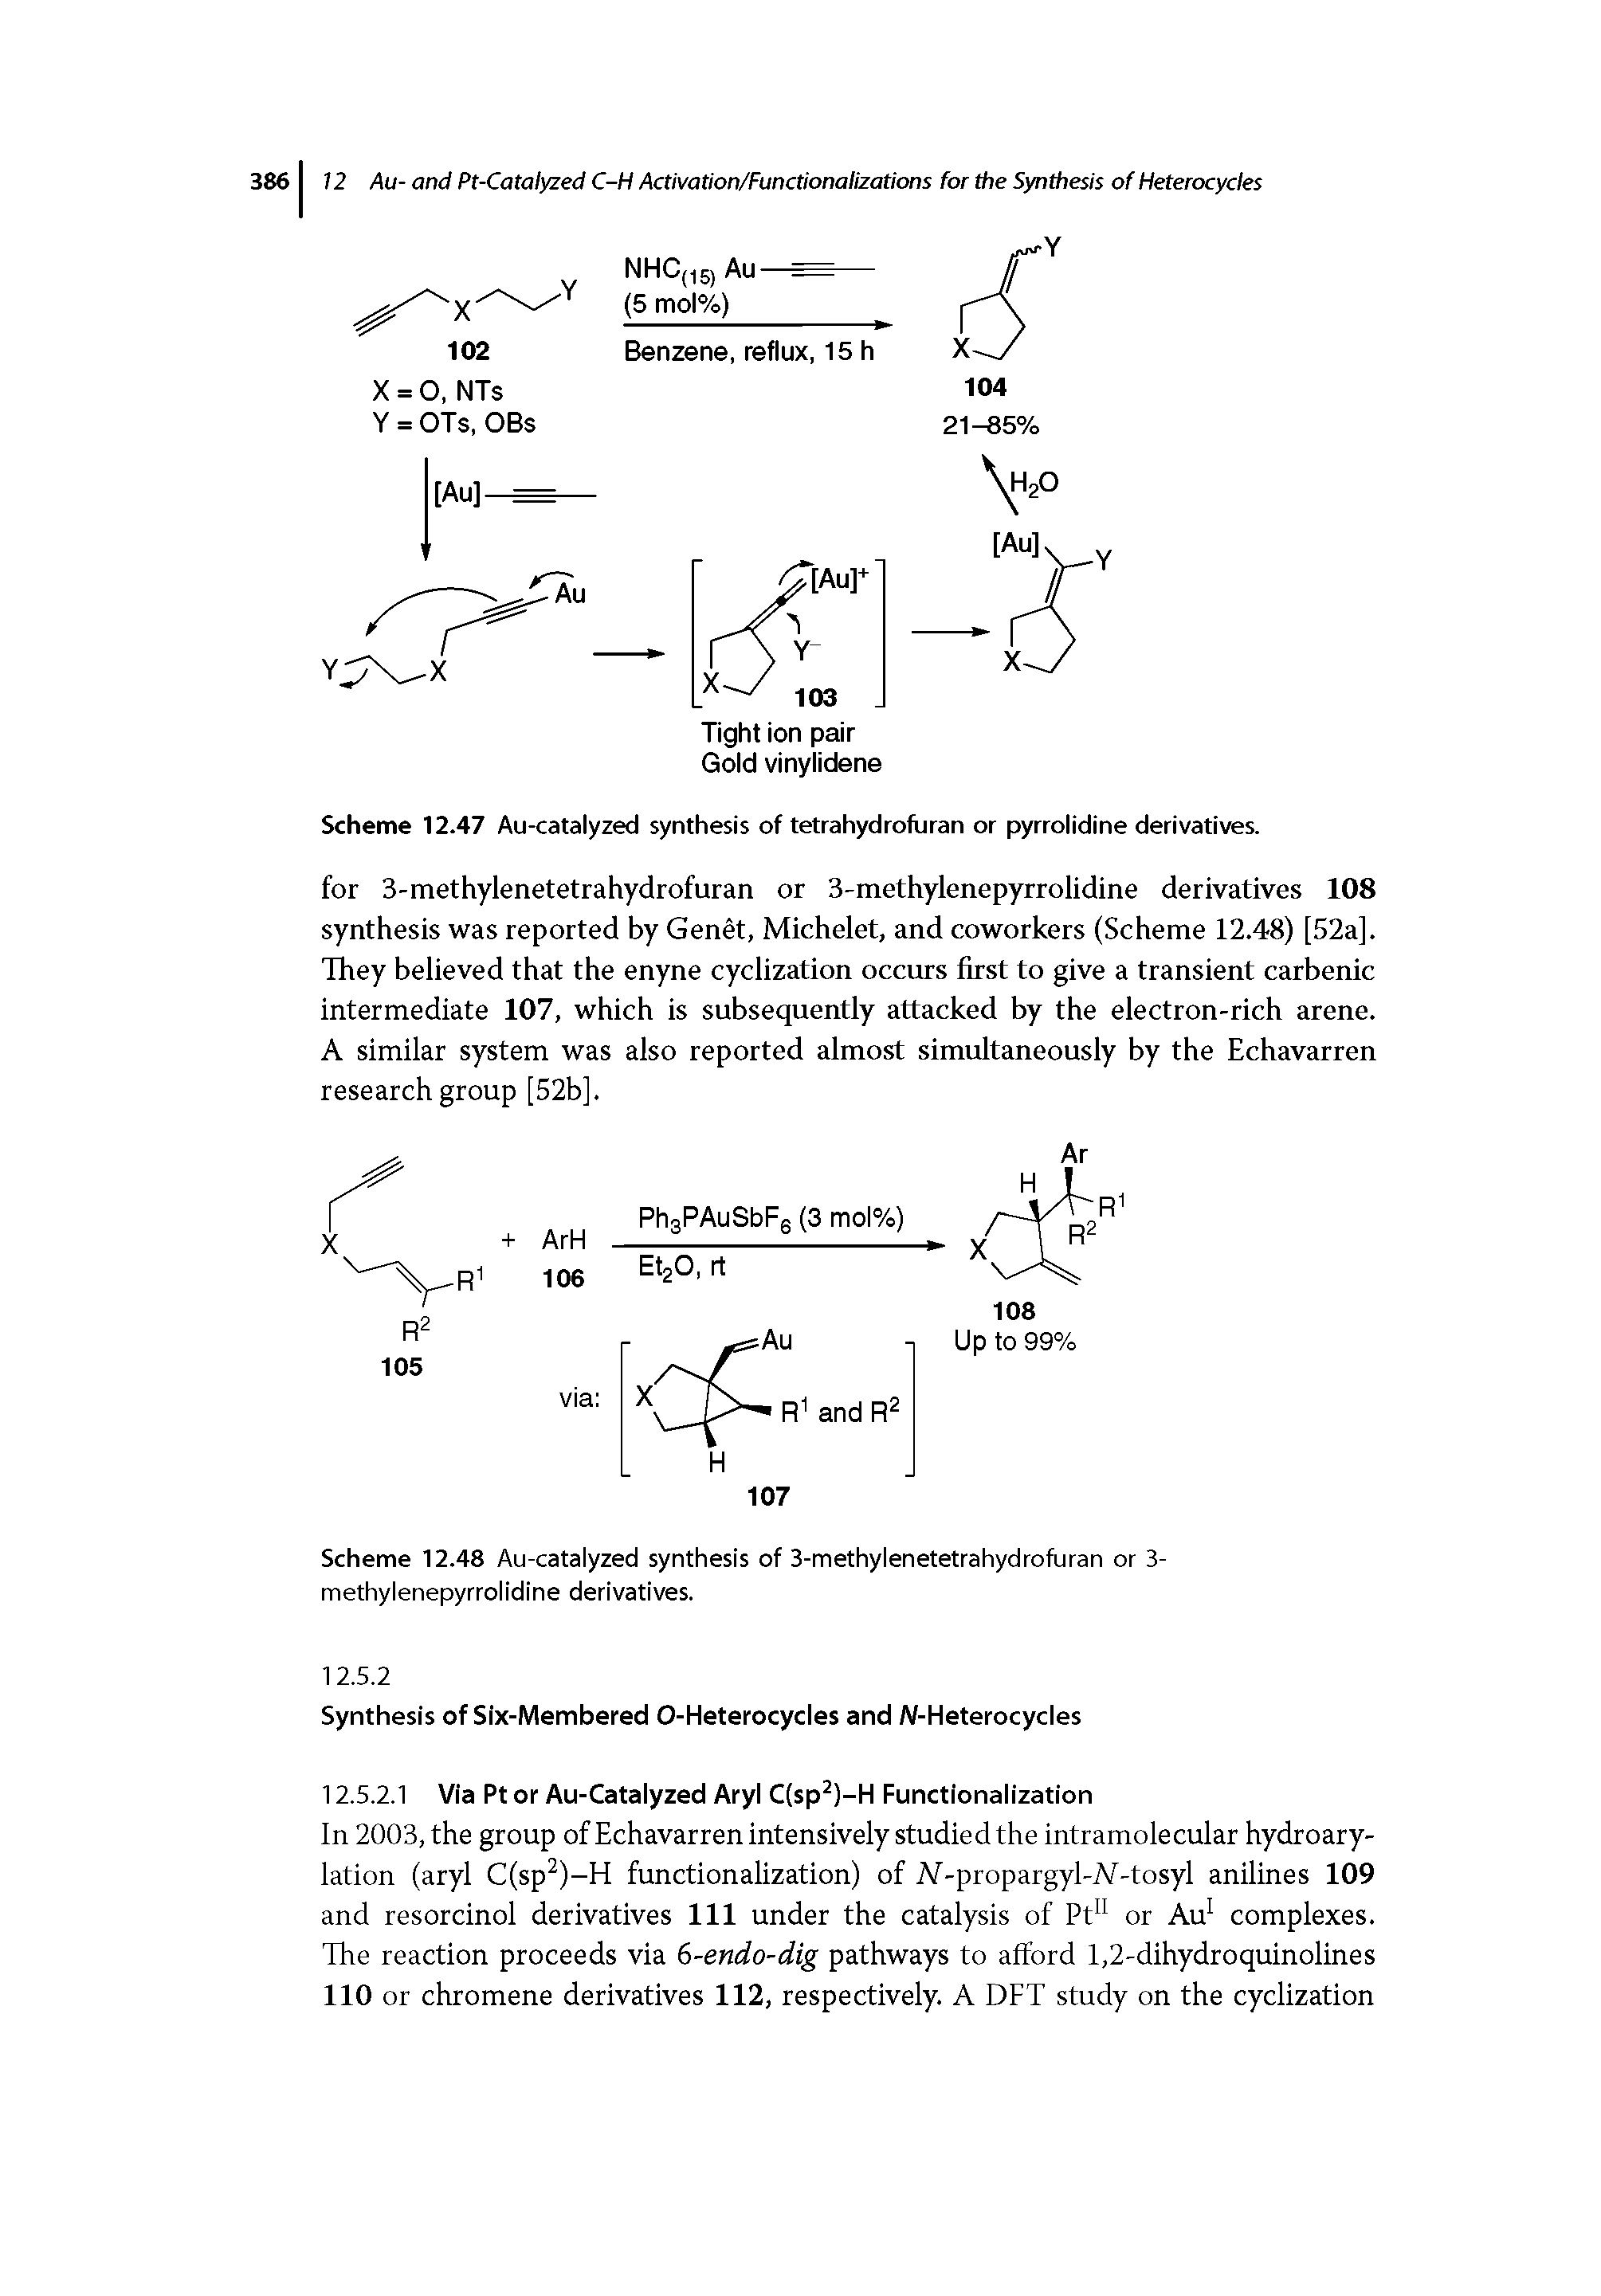 Scheme 12.47 Au-cataiyzed synthesis of tetrahydrofuran or pyrrolidine derivatives.